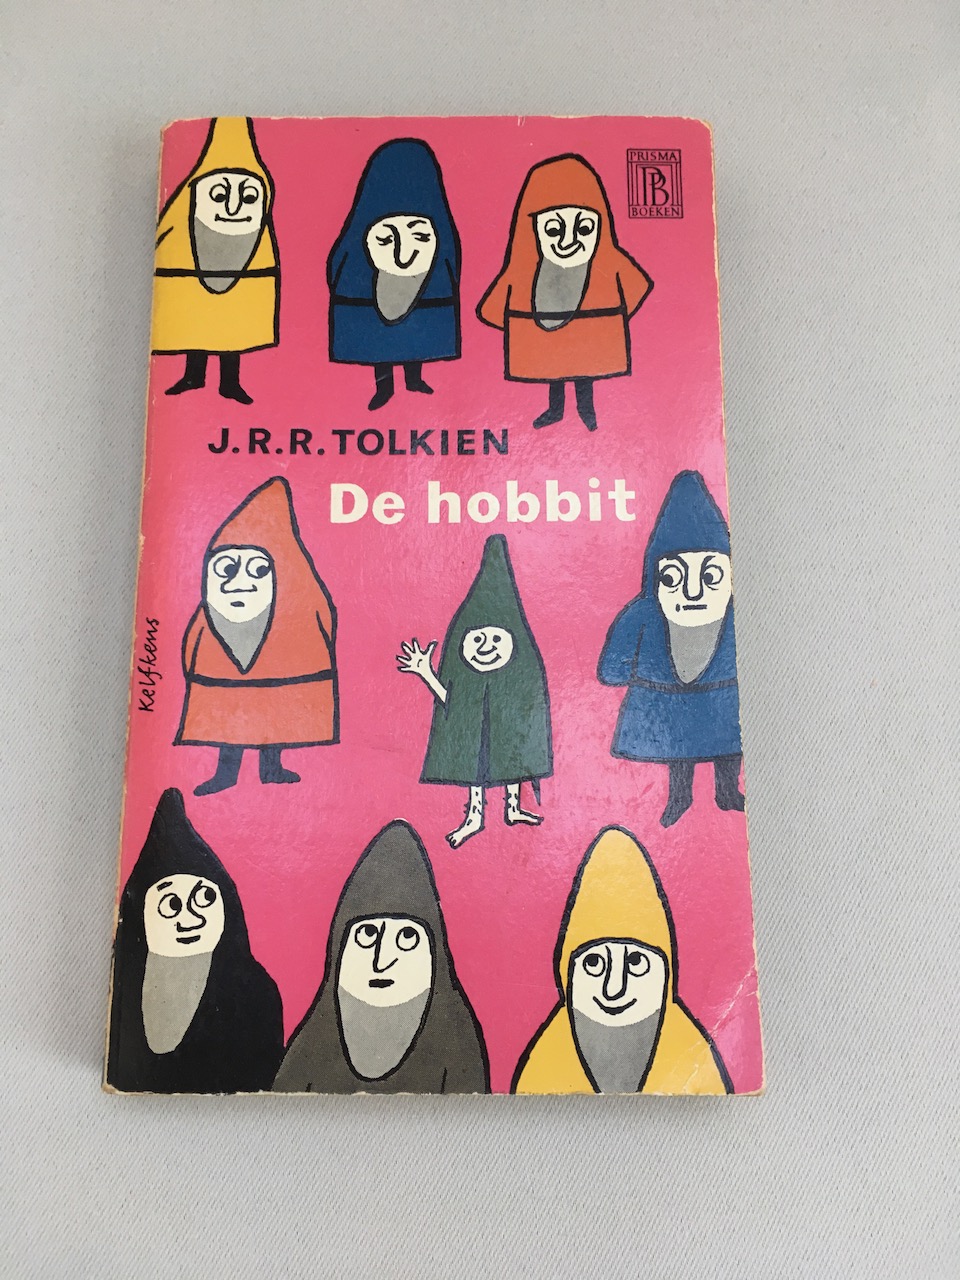 
J.R.R. Tolkien, De Hobbit, Dutch, paperback, 1960, 1st printing 1